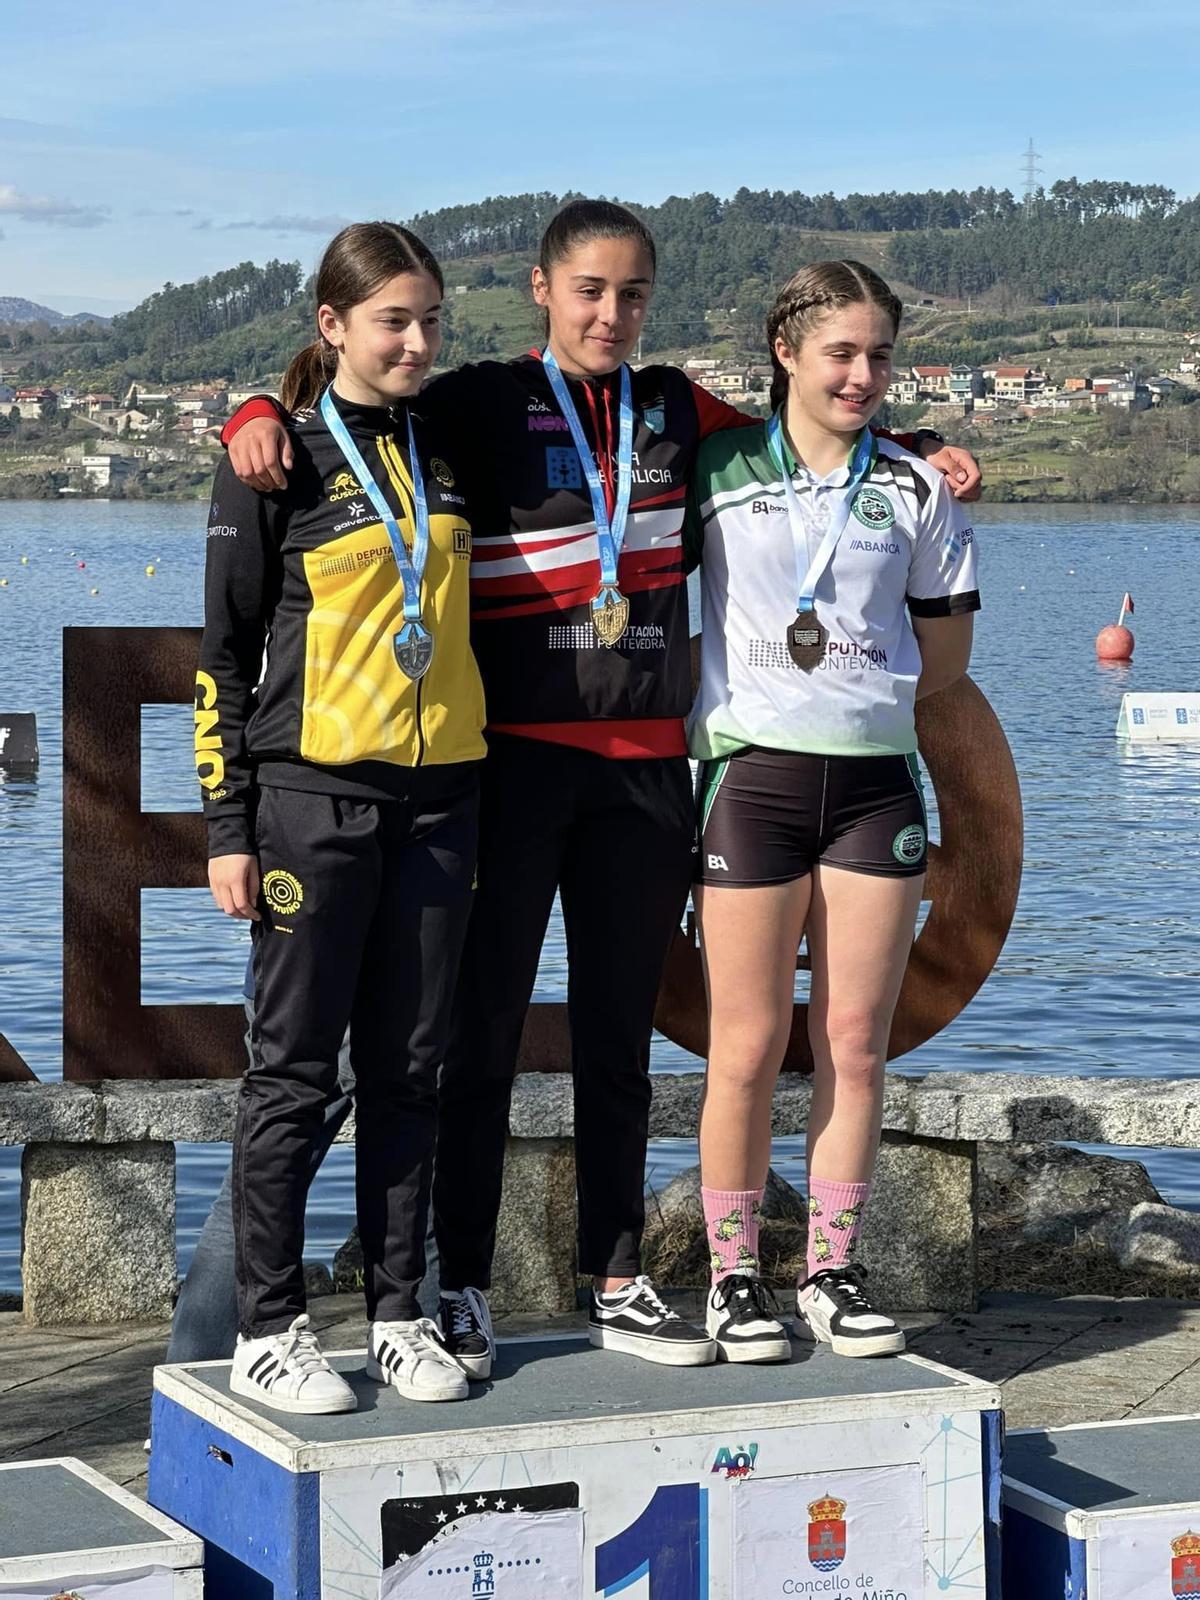 Podio del C-1 juvenil femenino con Nerea Novo (oro) y Silvia Gago (plata.